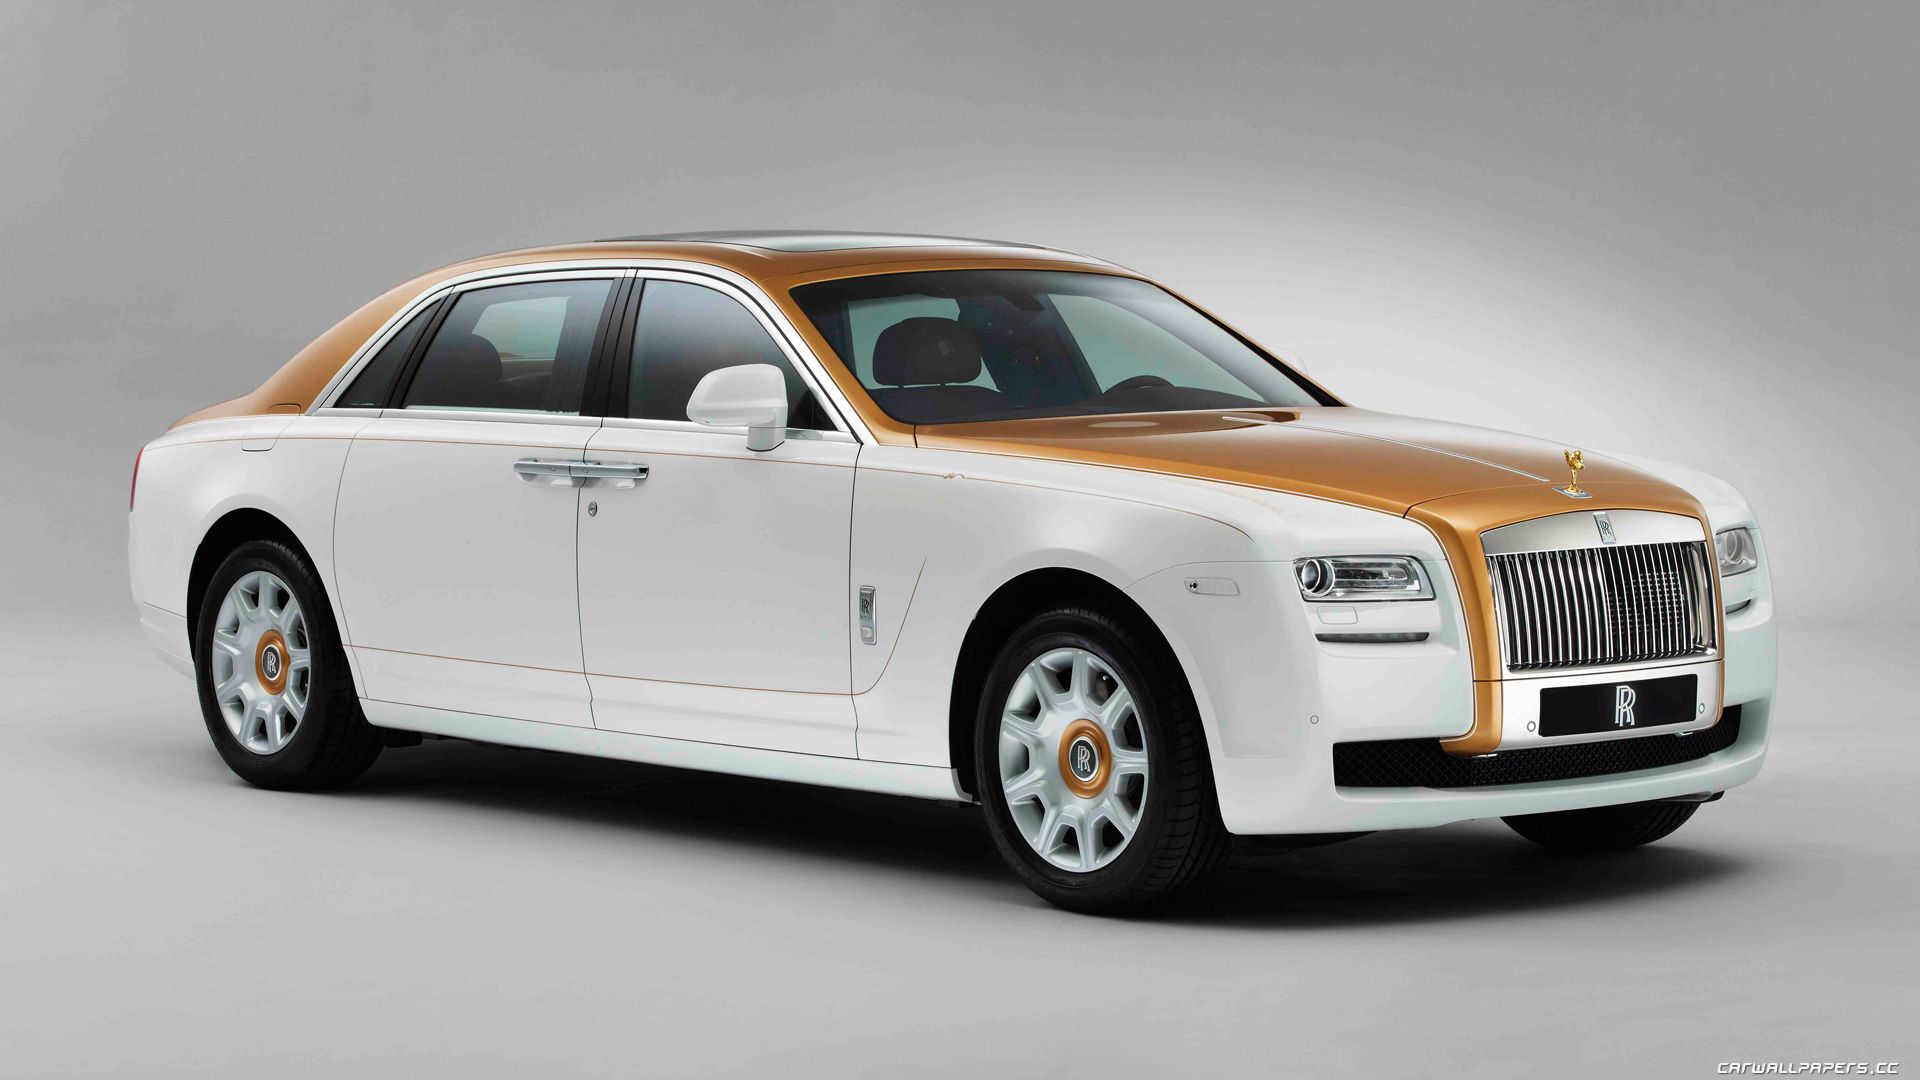 Car wallpapers - Rolls-Royce Ghost Extended Wheelbase Chengdu ...